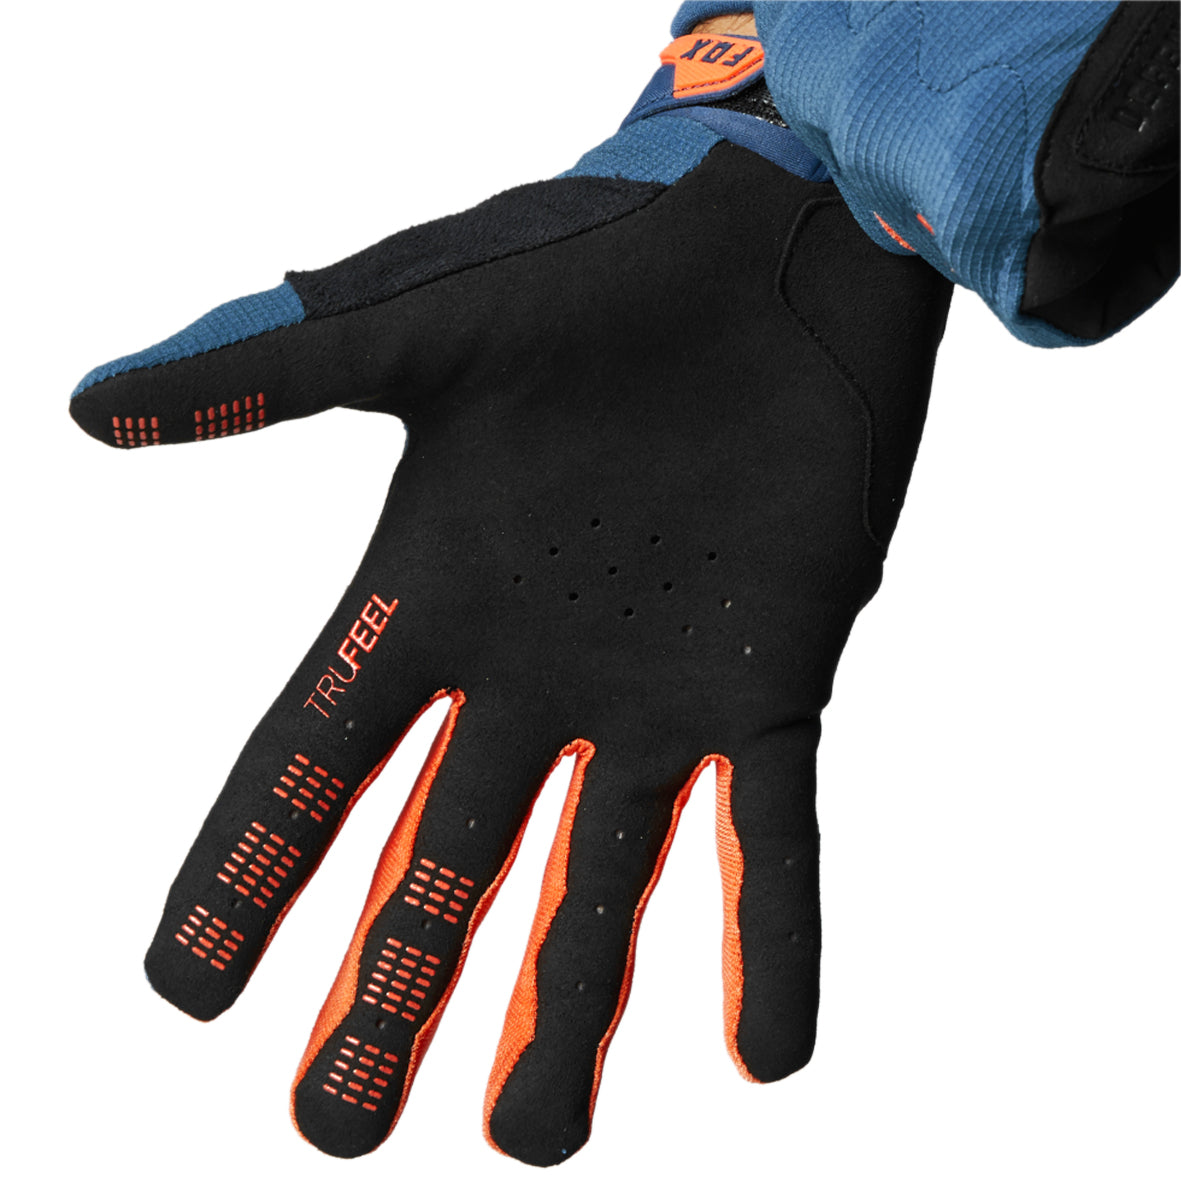 Fox Defend D30 MTB Gloves (Dark Indigo)